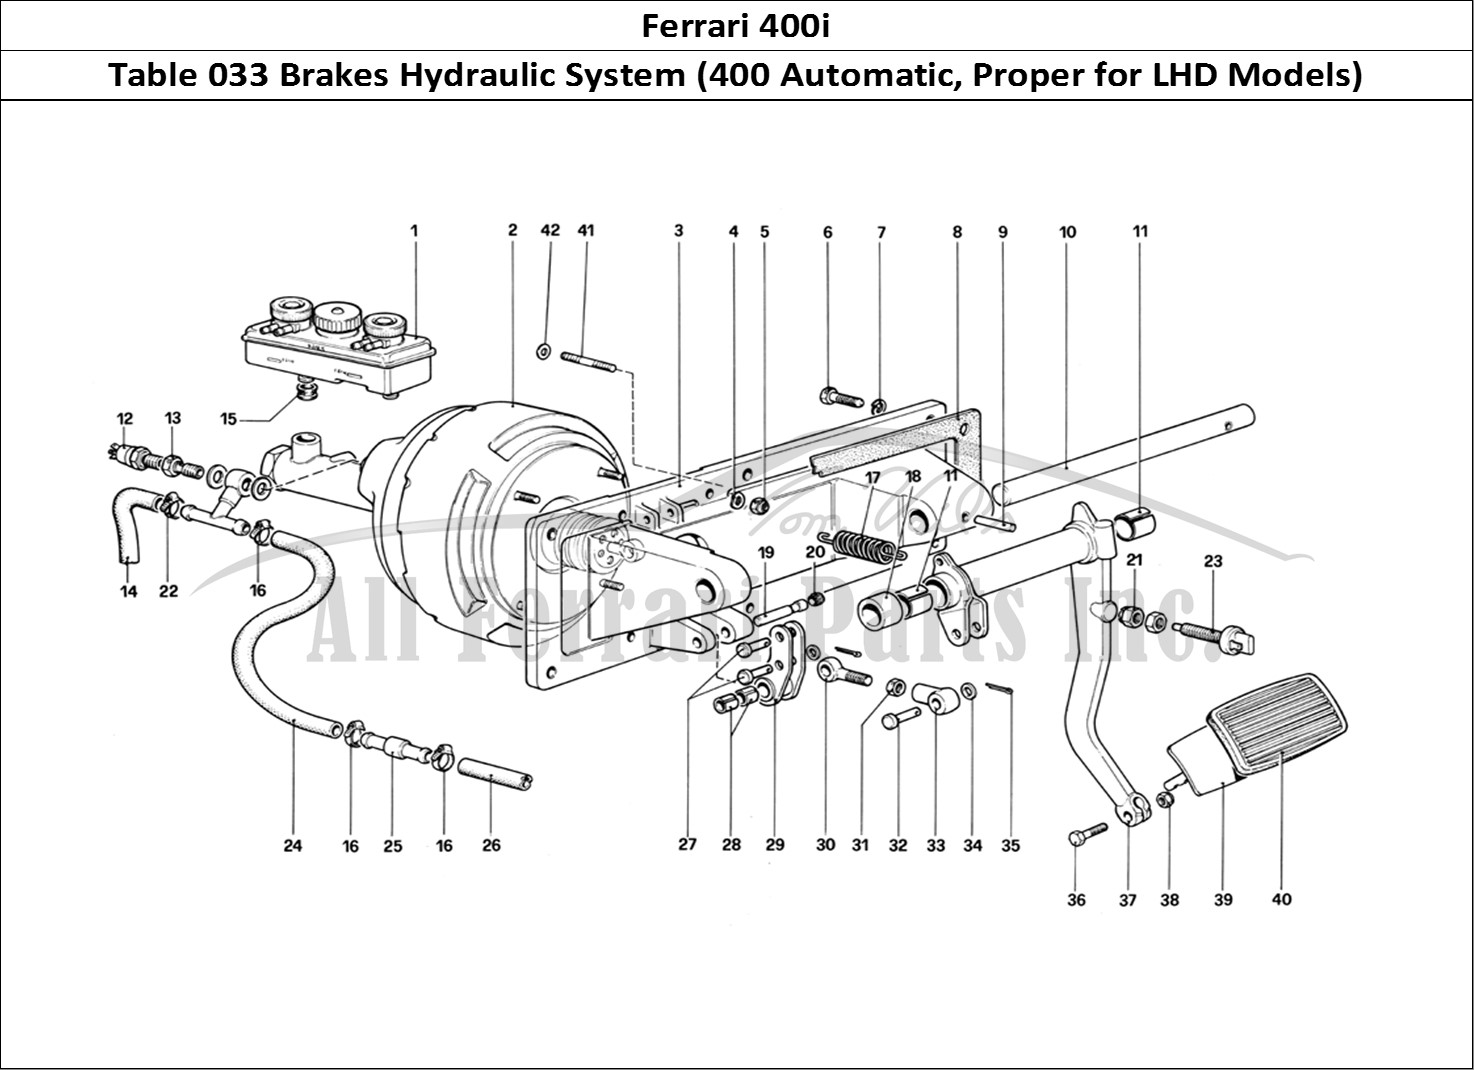 Ferrari Parts Ferrari 400i (1983 Mechanical) Page 033 Brakes Hydraulic Controll